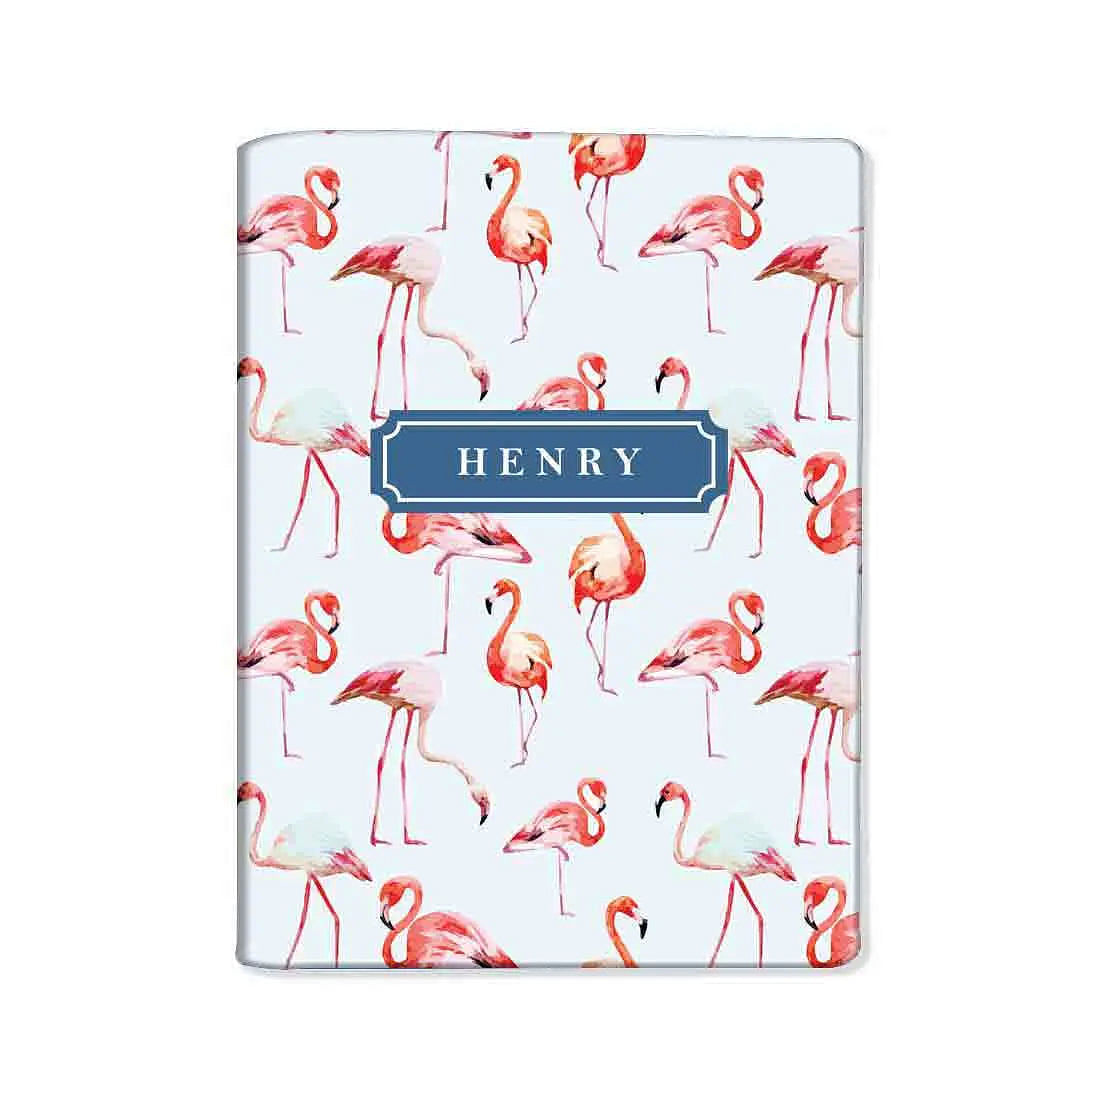 Cool Custom Passport Cover - Flamingos Blue - Nutcase